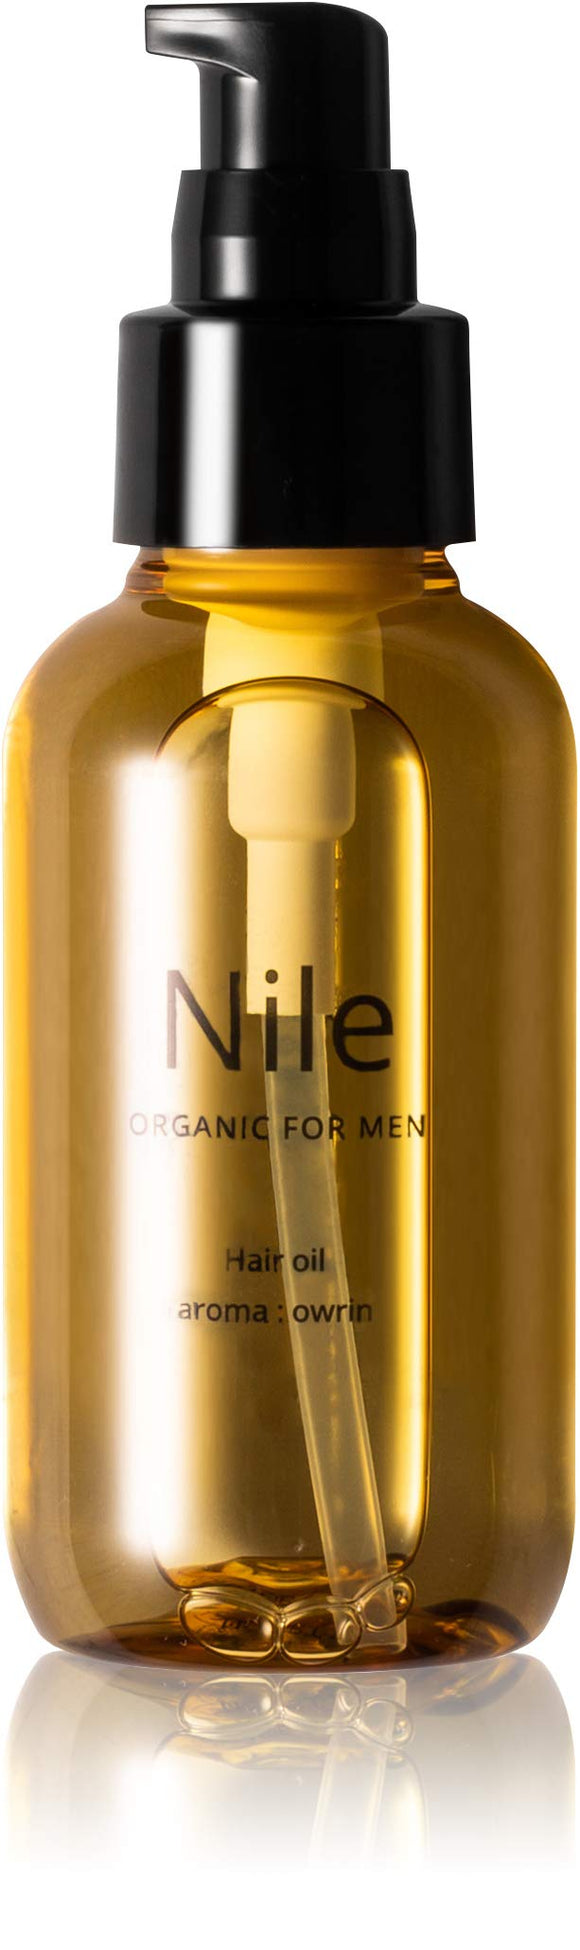 Nile Hair Oil, Men's, Women's, Non-Rinse Treatment, Oulin Scent, 100mL